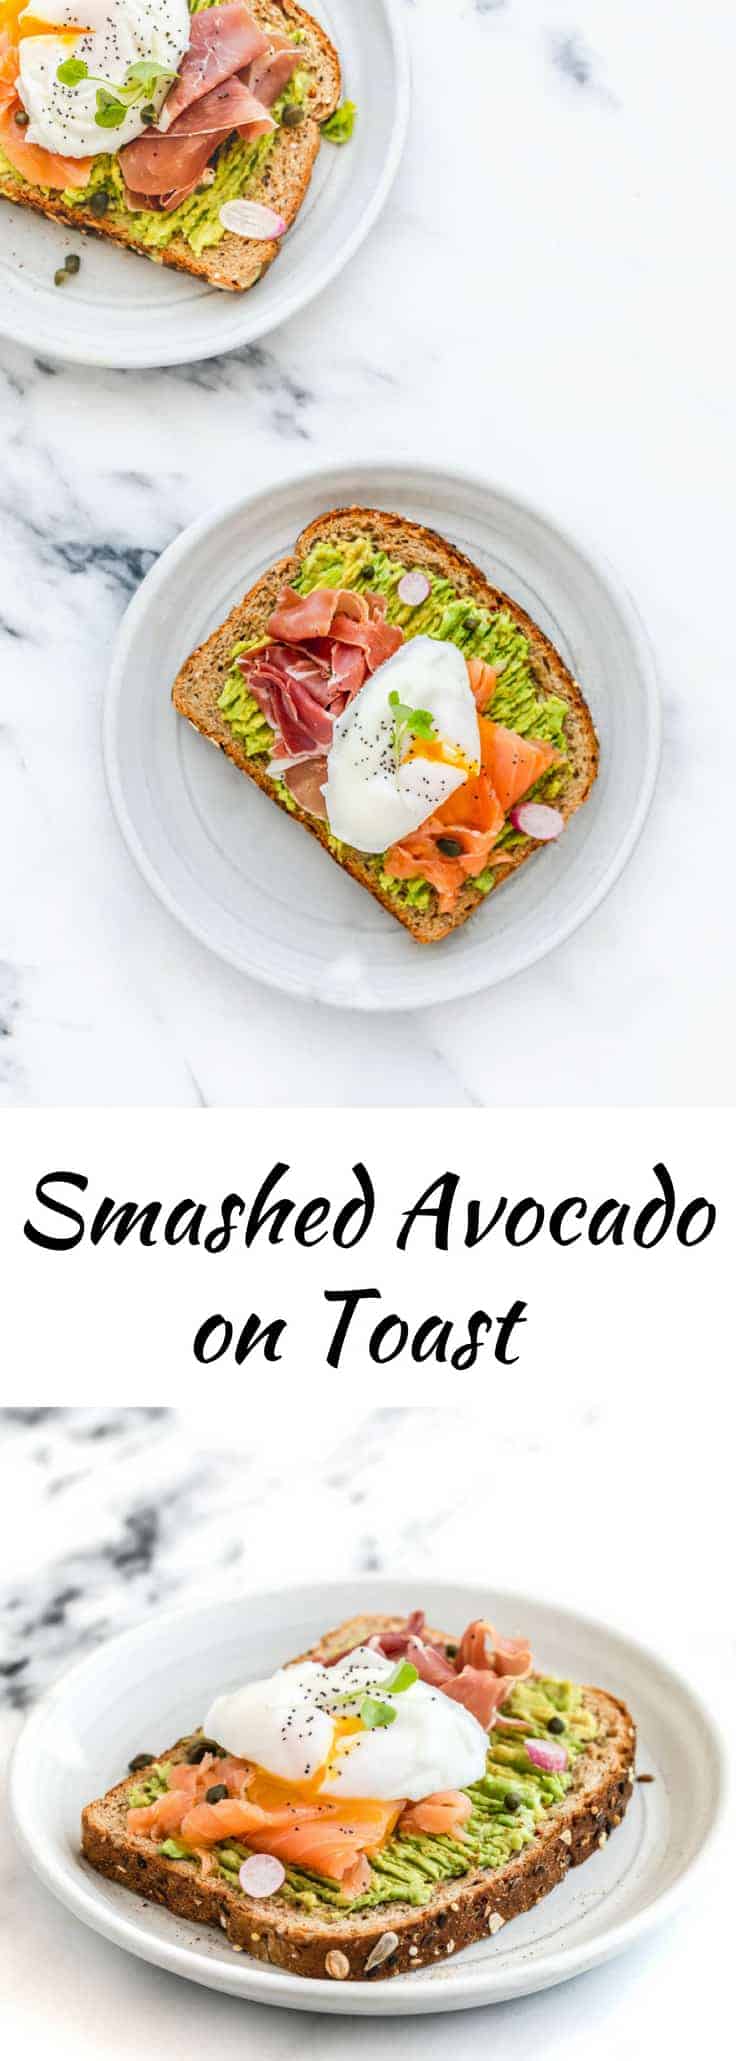 Smashed Avocado on Toast with Egg, Smoked Salmon, and Prosciutto